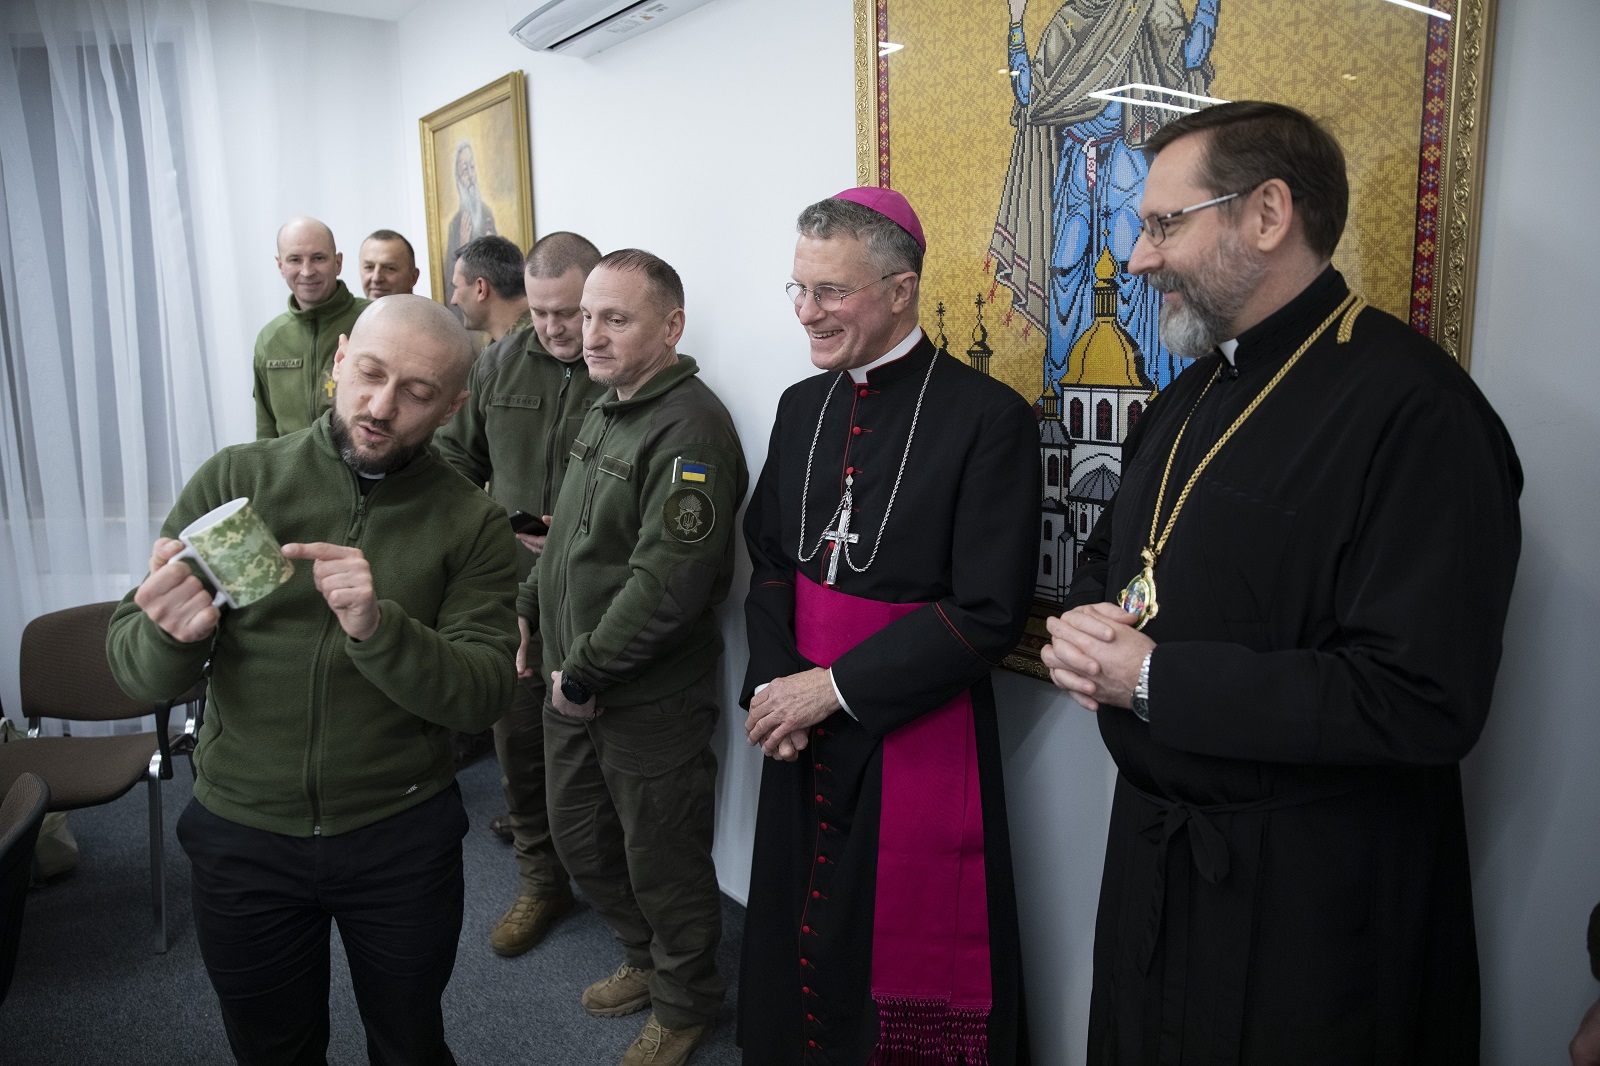 Archbishop Broglio visited Ukraine, meeting with military chaplains